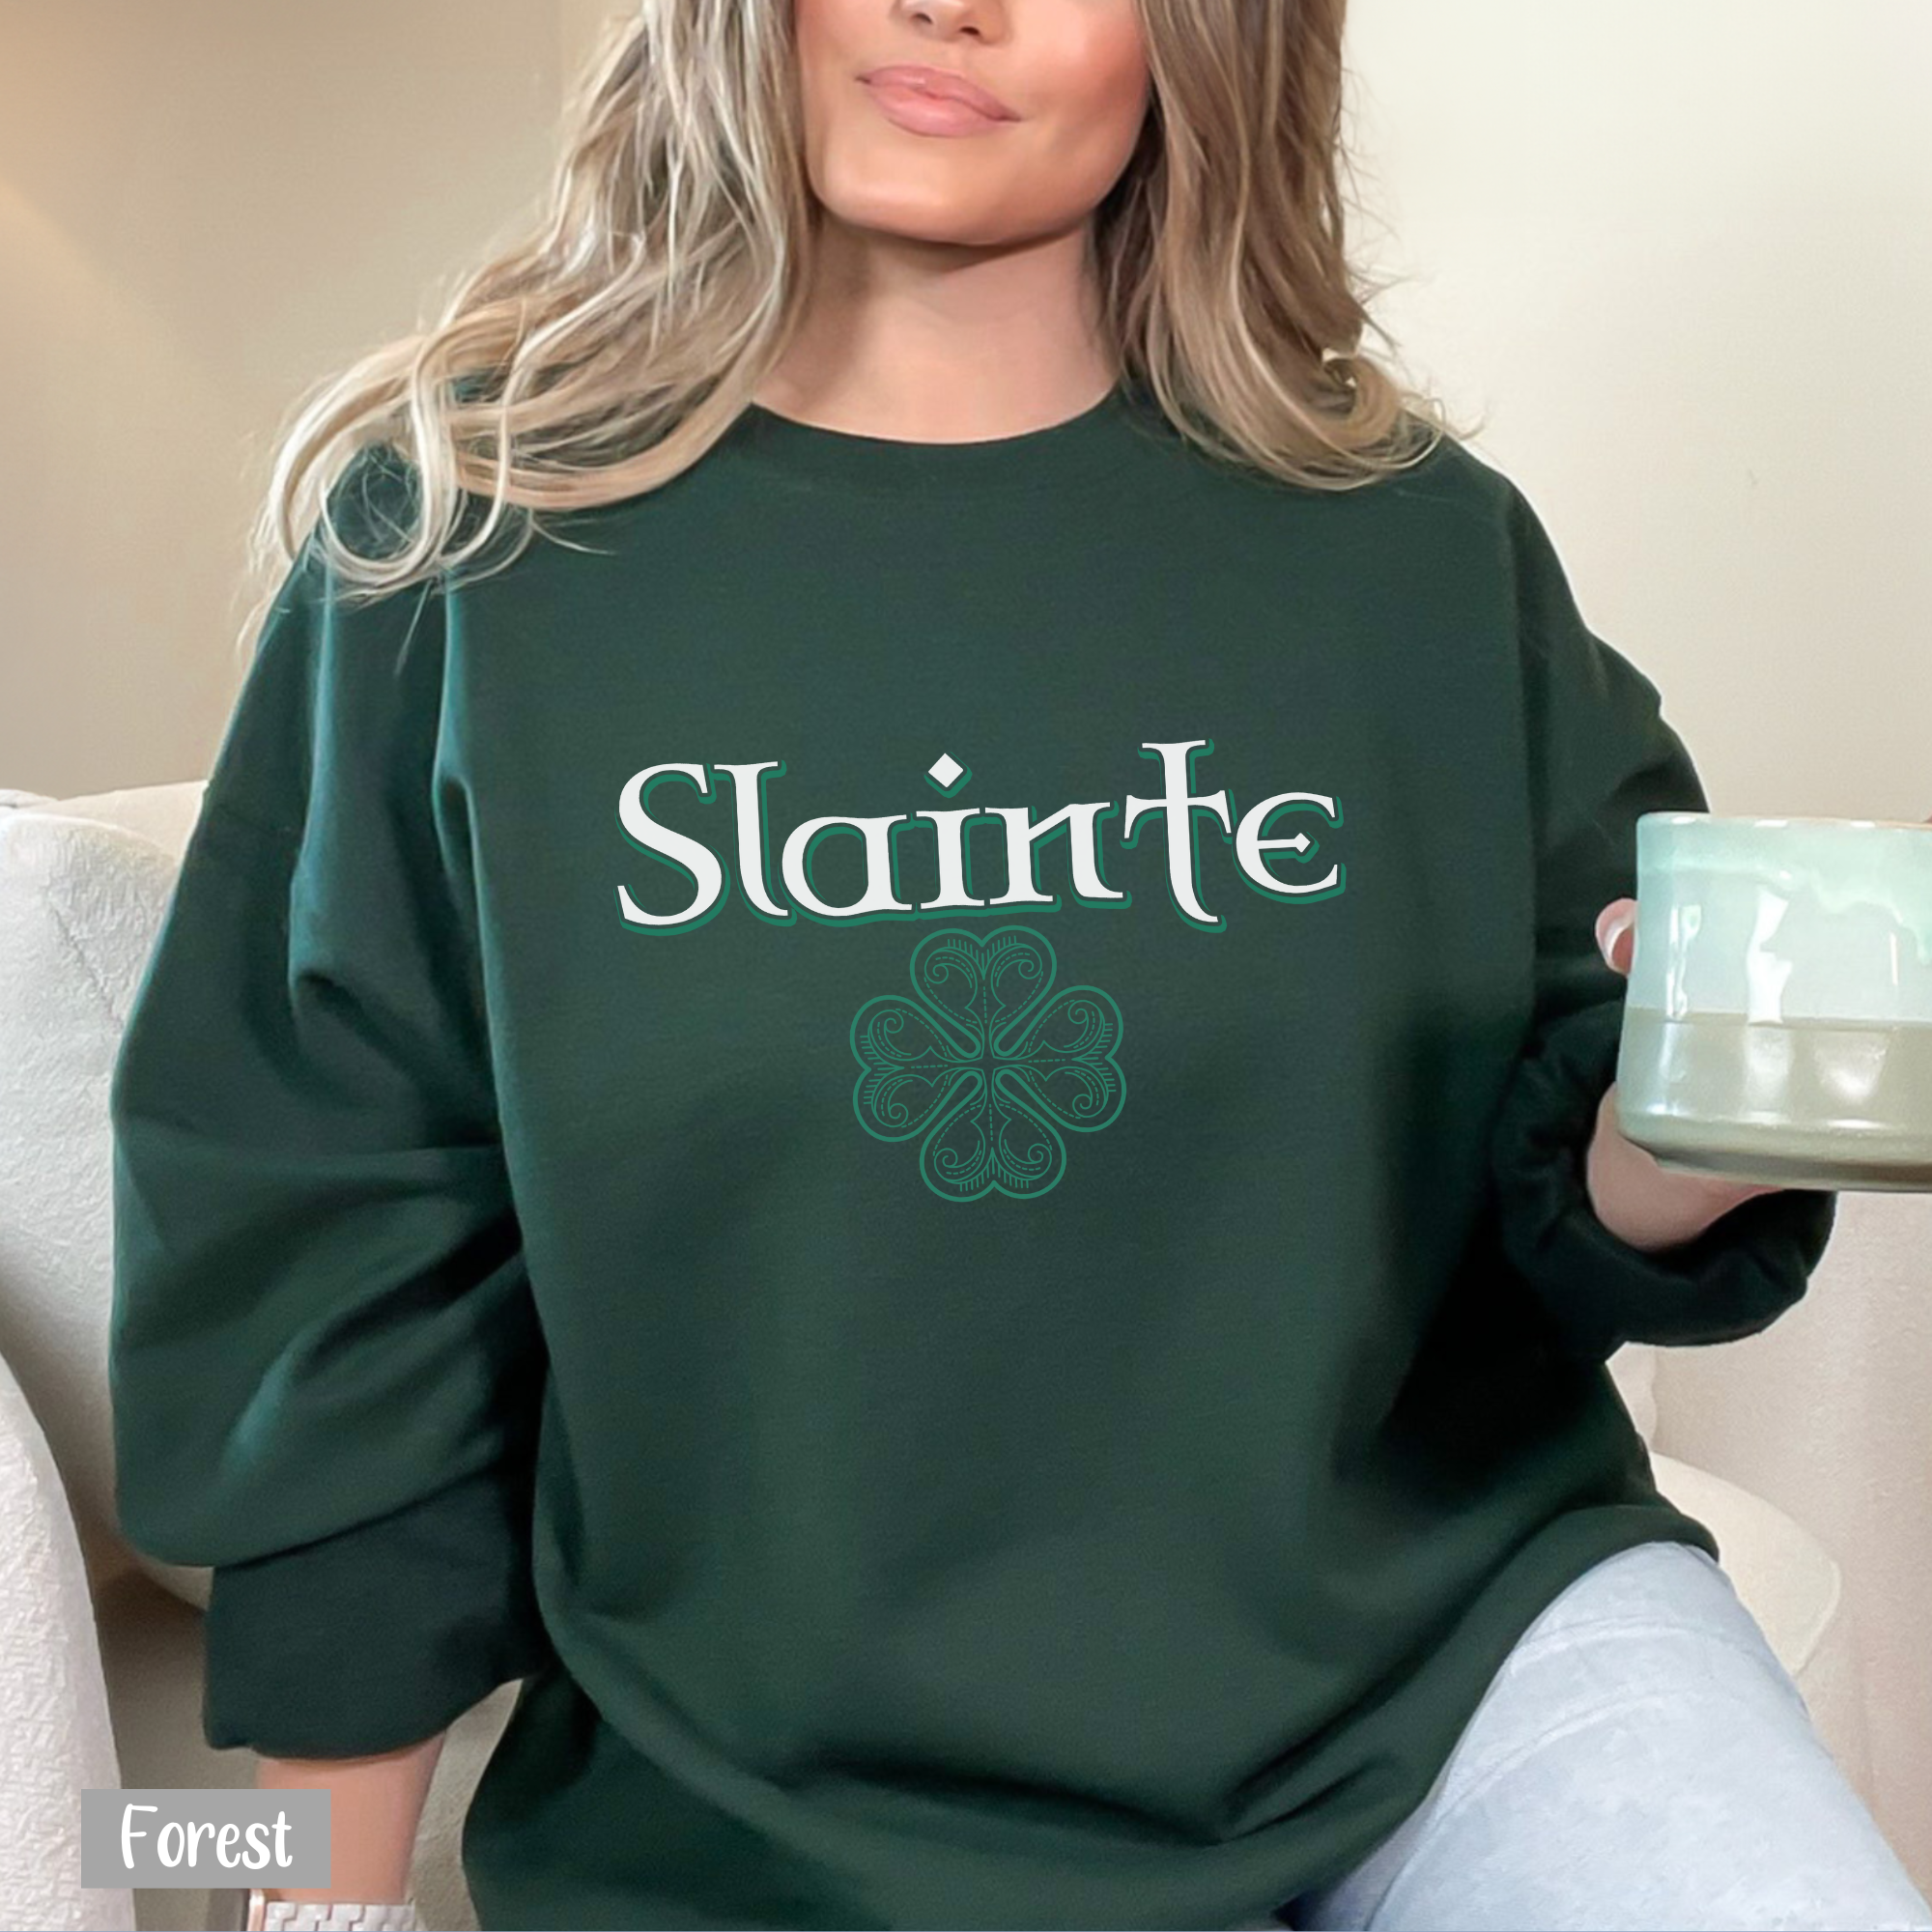 Slainte Shirt - St. Patrick's Day Gift